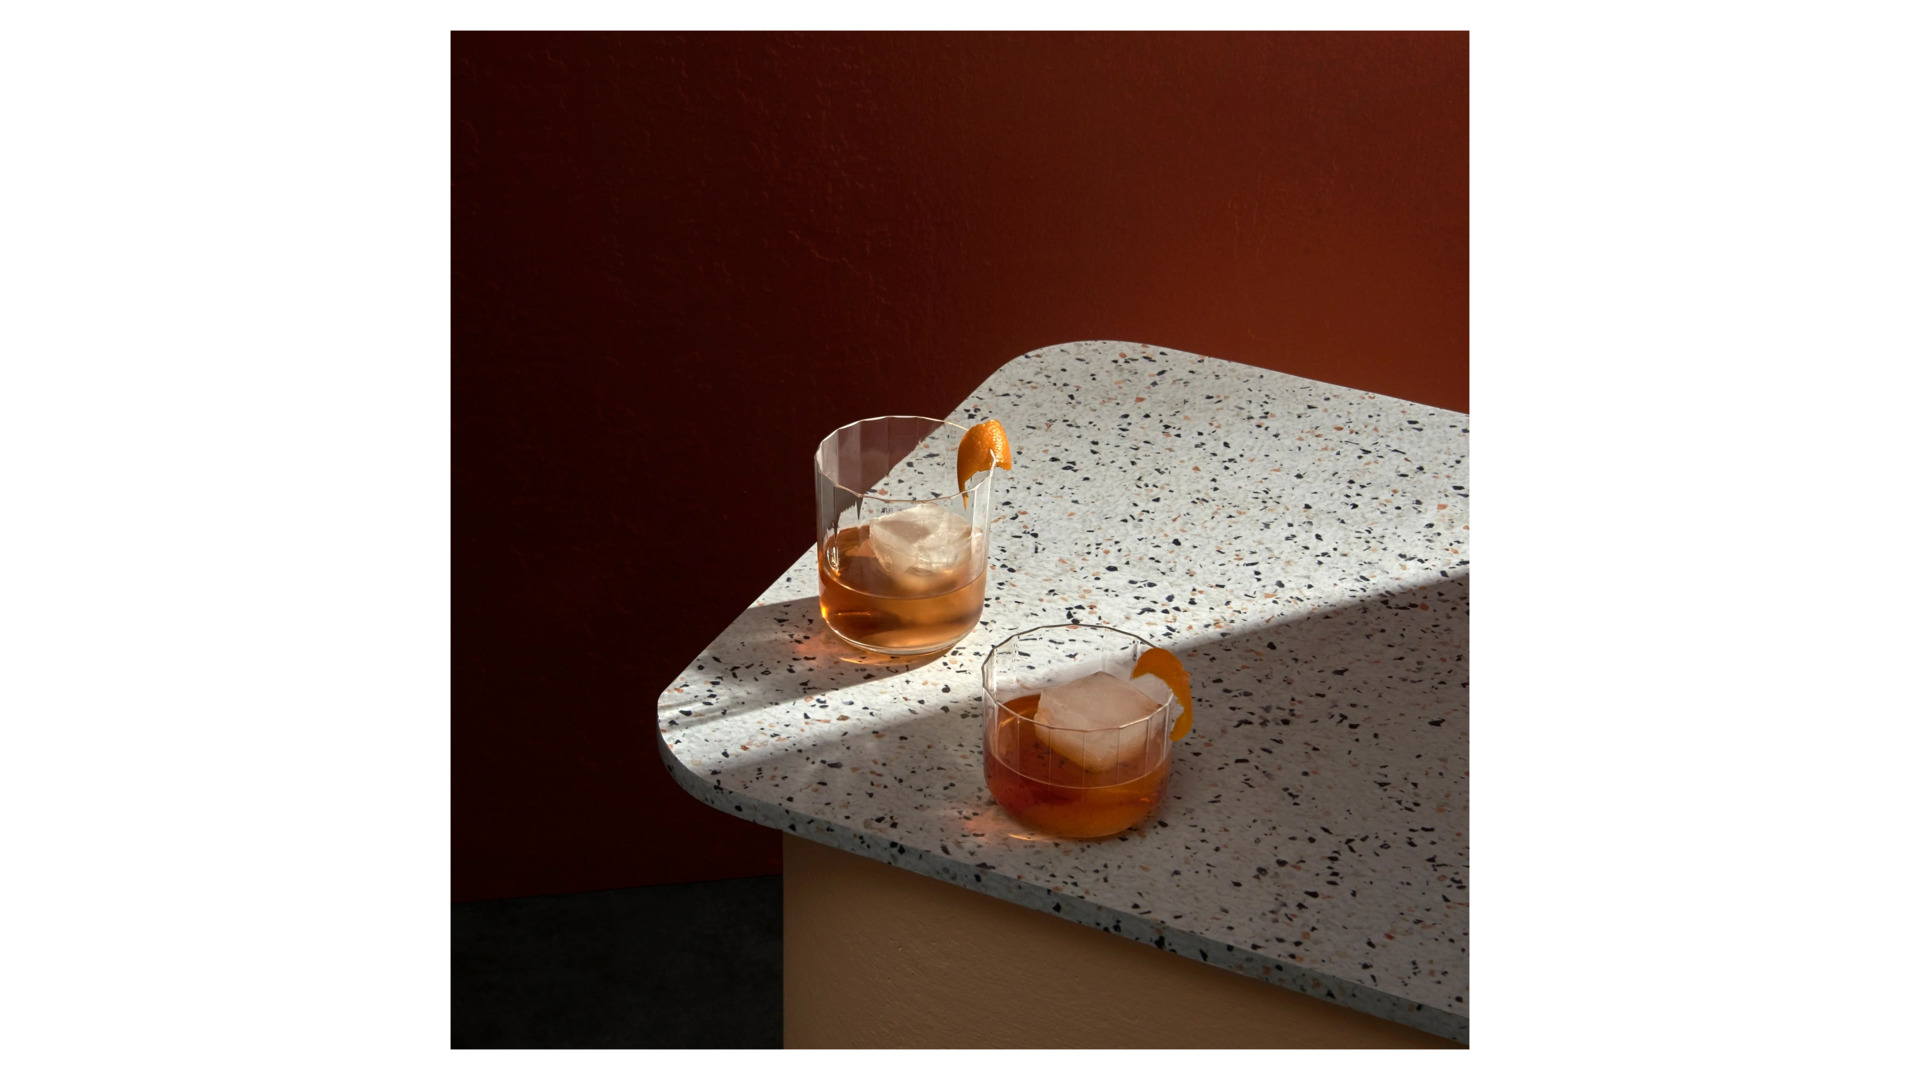 Набор стаканов для воды Nude Glass Нео 530 мл, 2 шт, хрусталь бессвинцовый